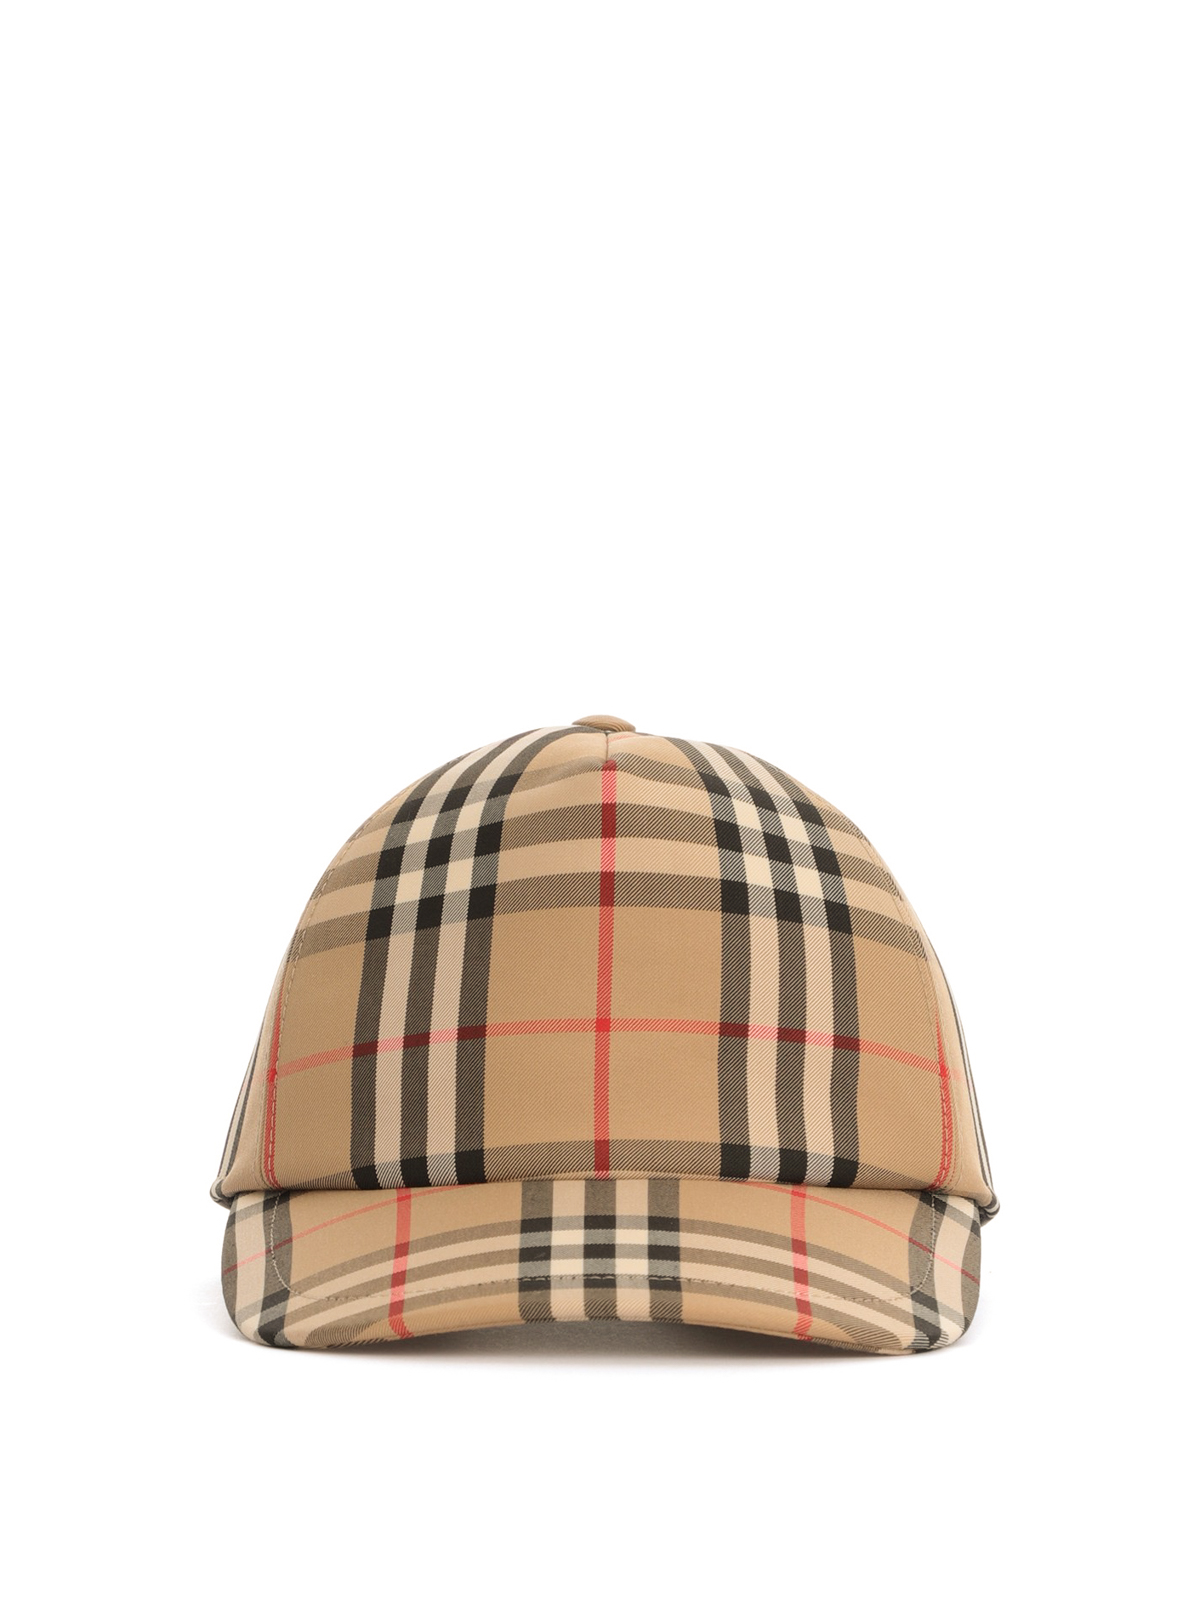 Hats & caps Burberry - Vintage Check baseball cap - 8026929 